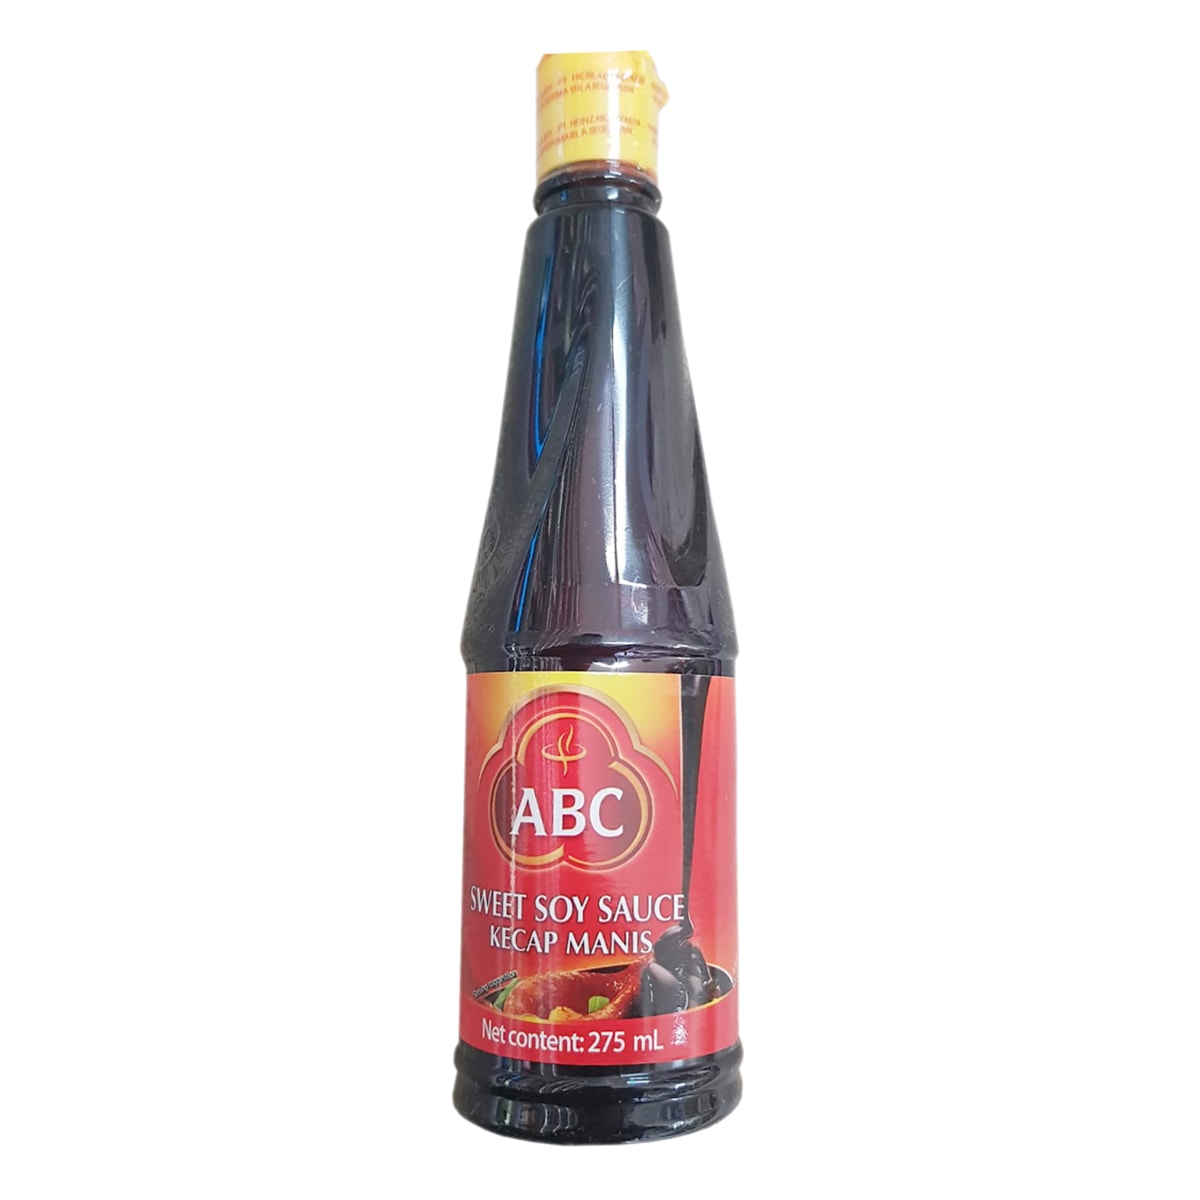 Buy ABC Kecap Manis (Indonesian Sweet Soy Sauce) - 275 ml